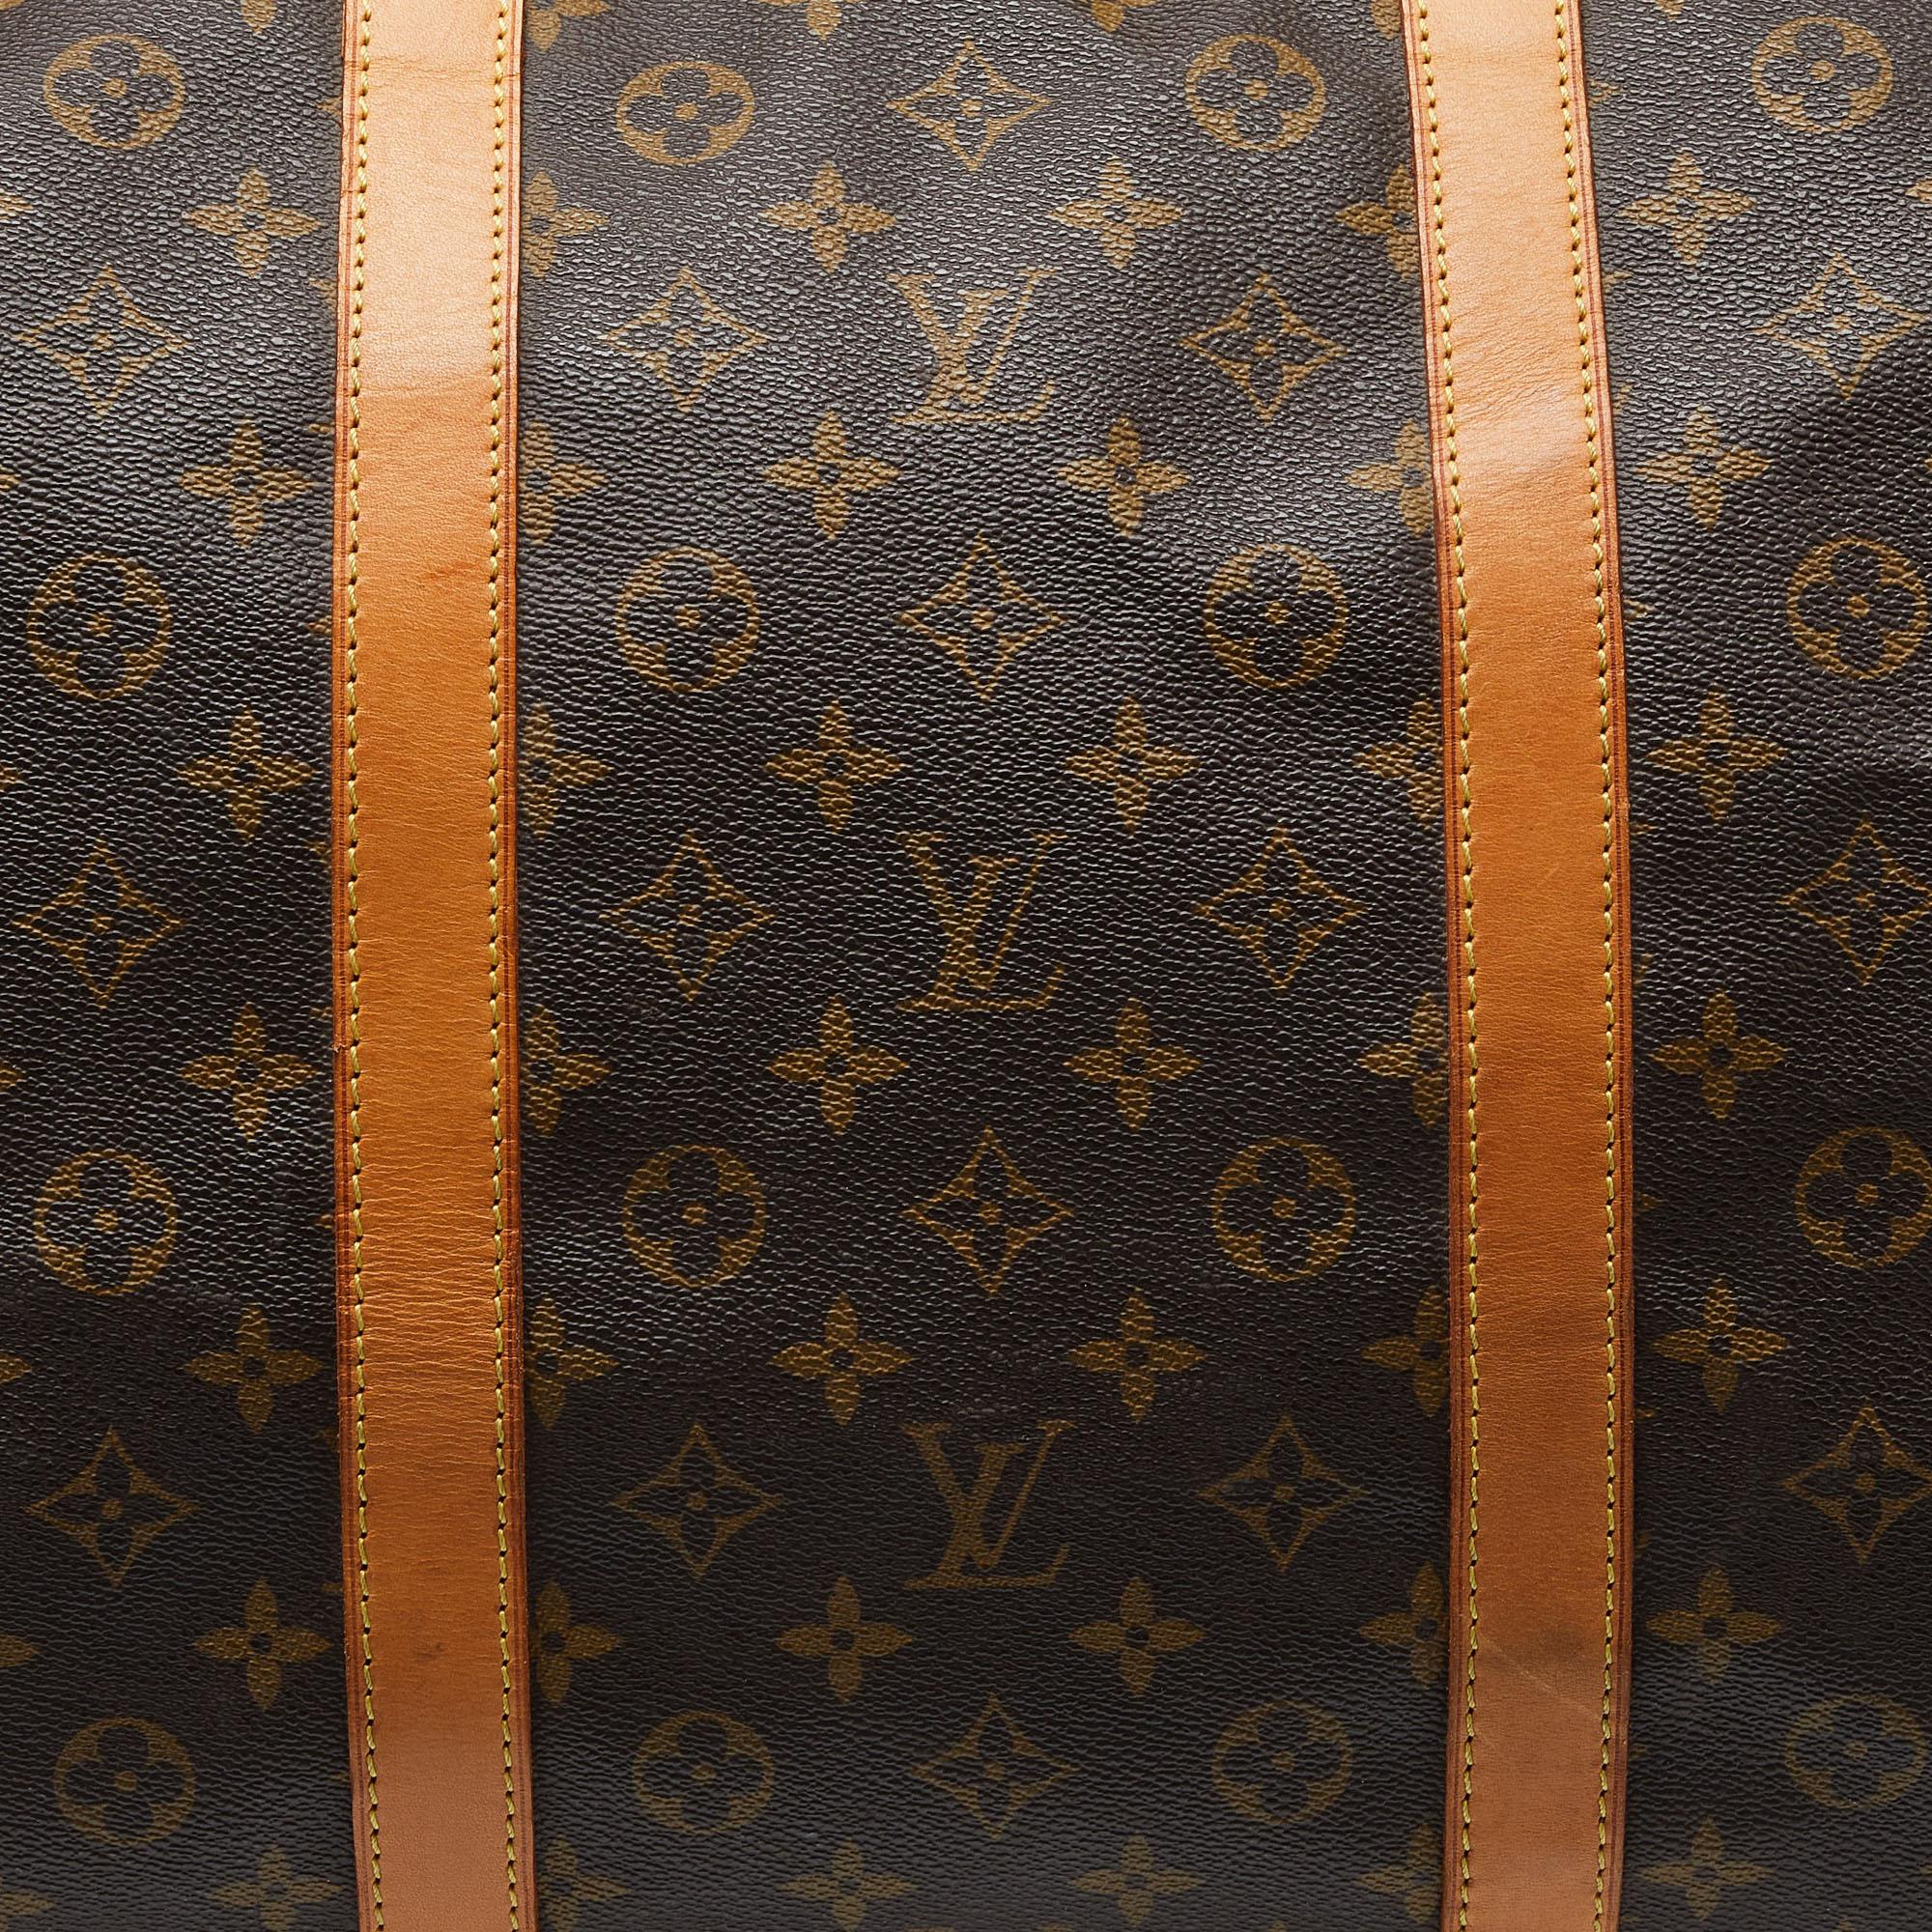 Louis Vuitton Monogram Canvas Keepall Bandouliere 60 Bag For Sale 2